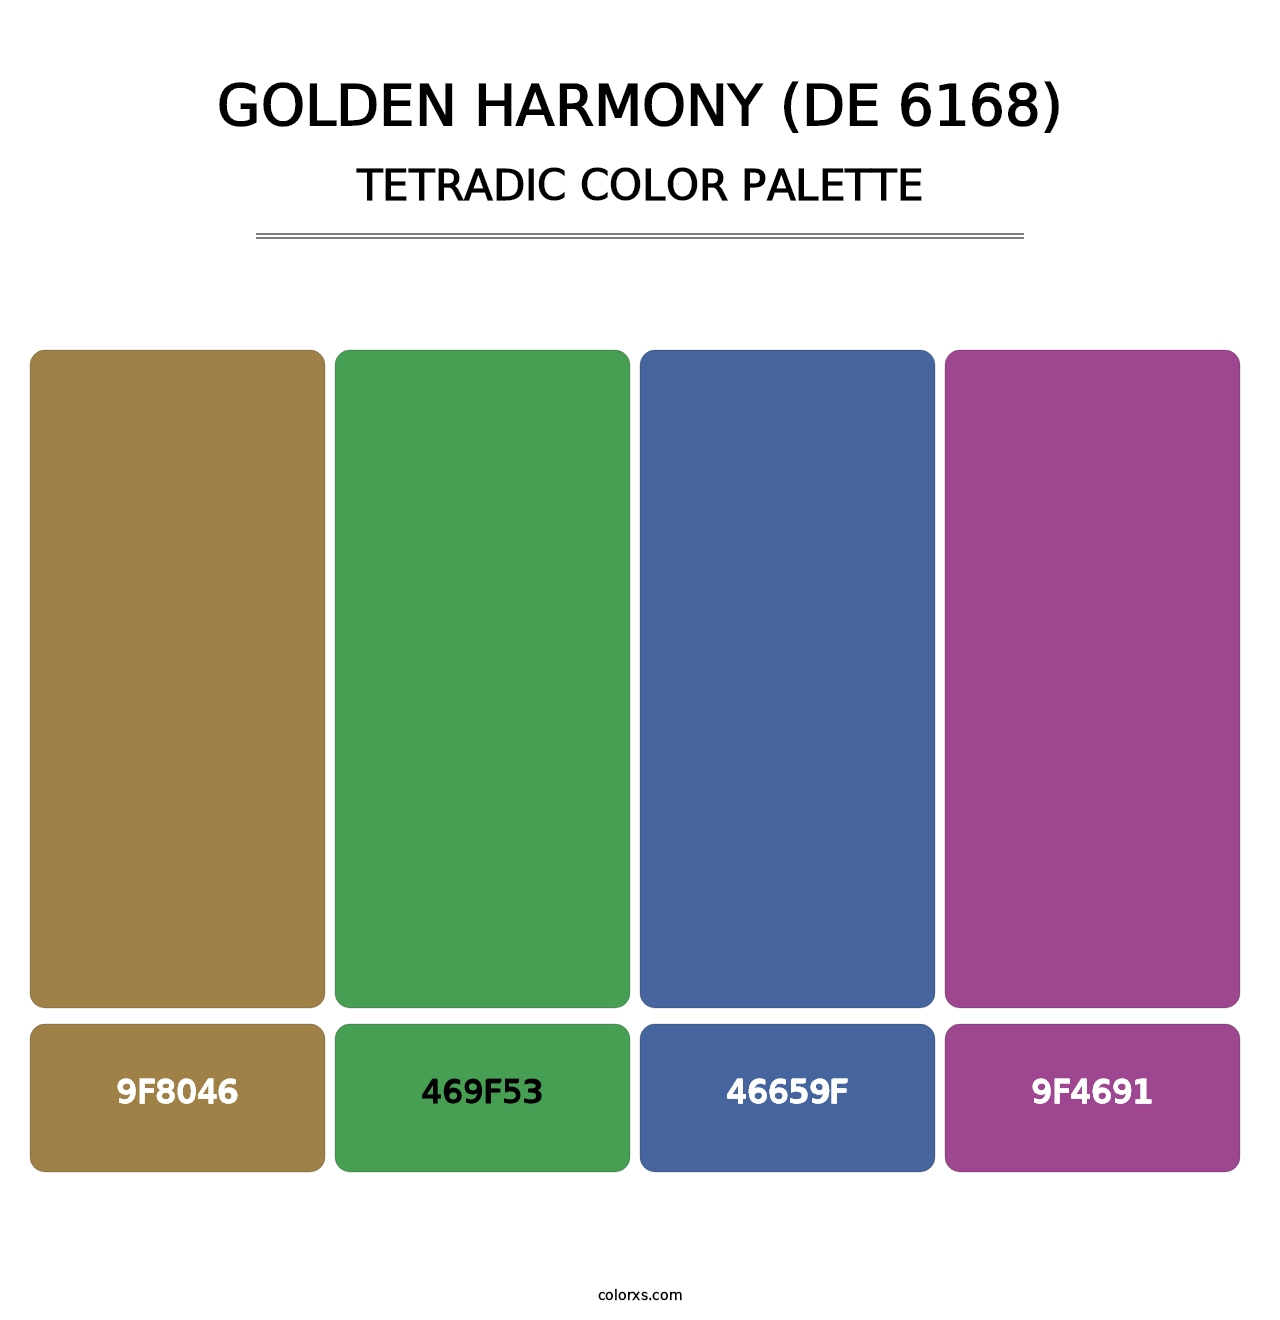 Golden Harmony (DE 6168) - Tetradic Color Palette